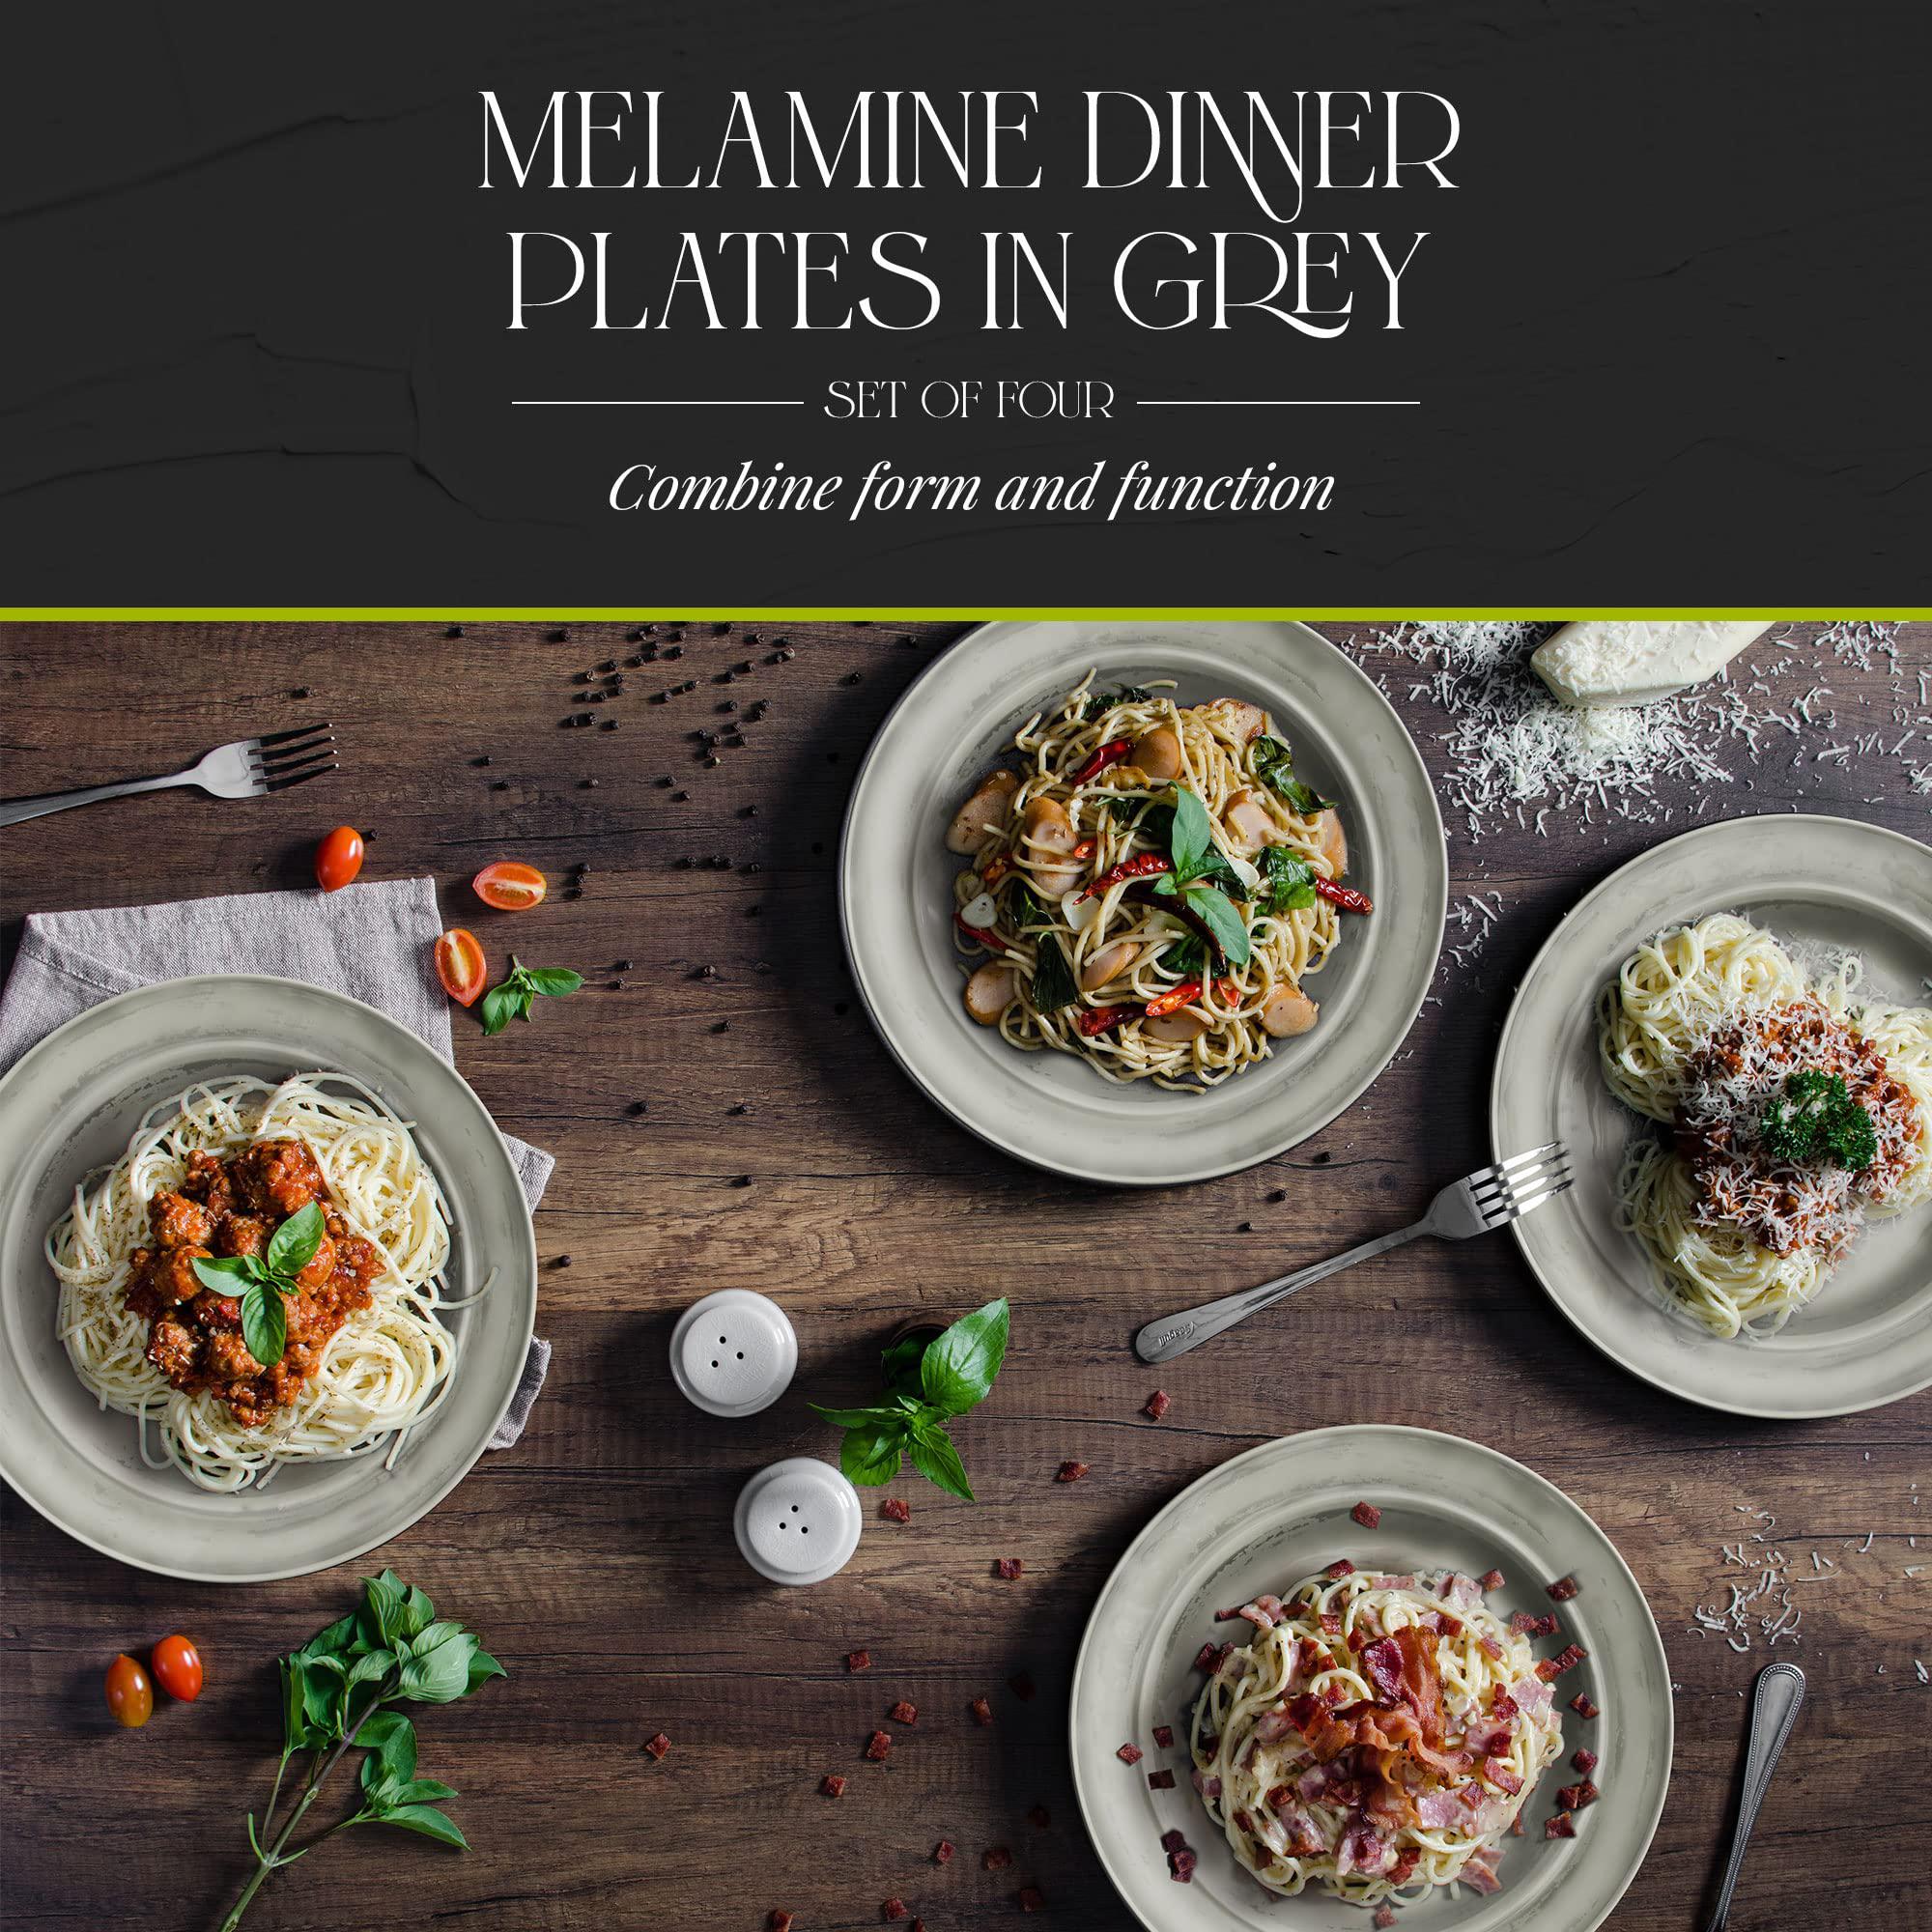 American Atelier fifth avenue melamine dinner plates | set of 4 | break and chip resistant, durable, and kid-friendly dinnerware set | indoor 